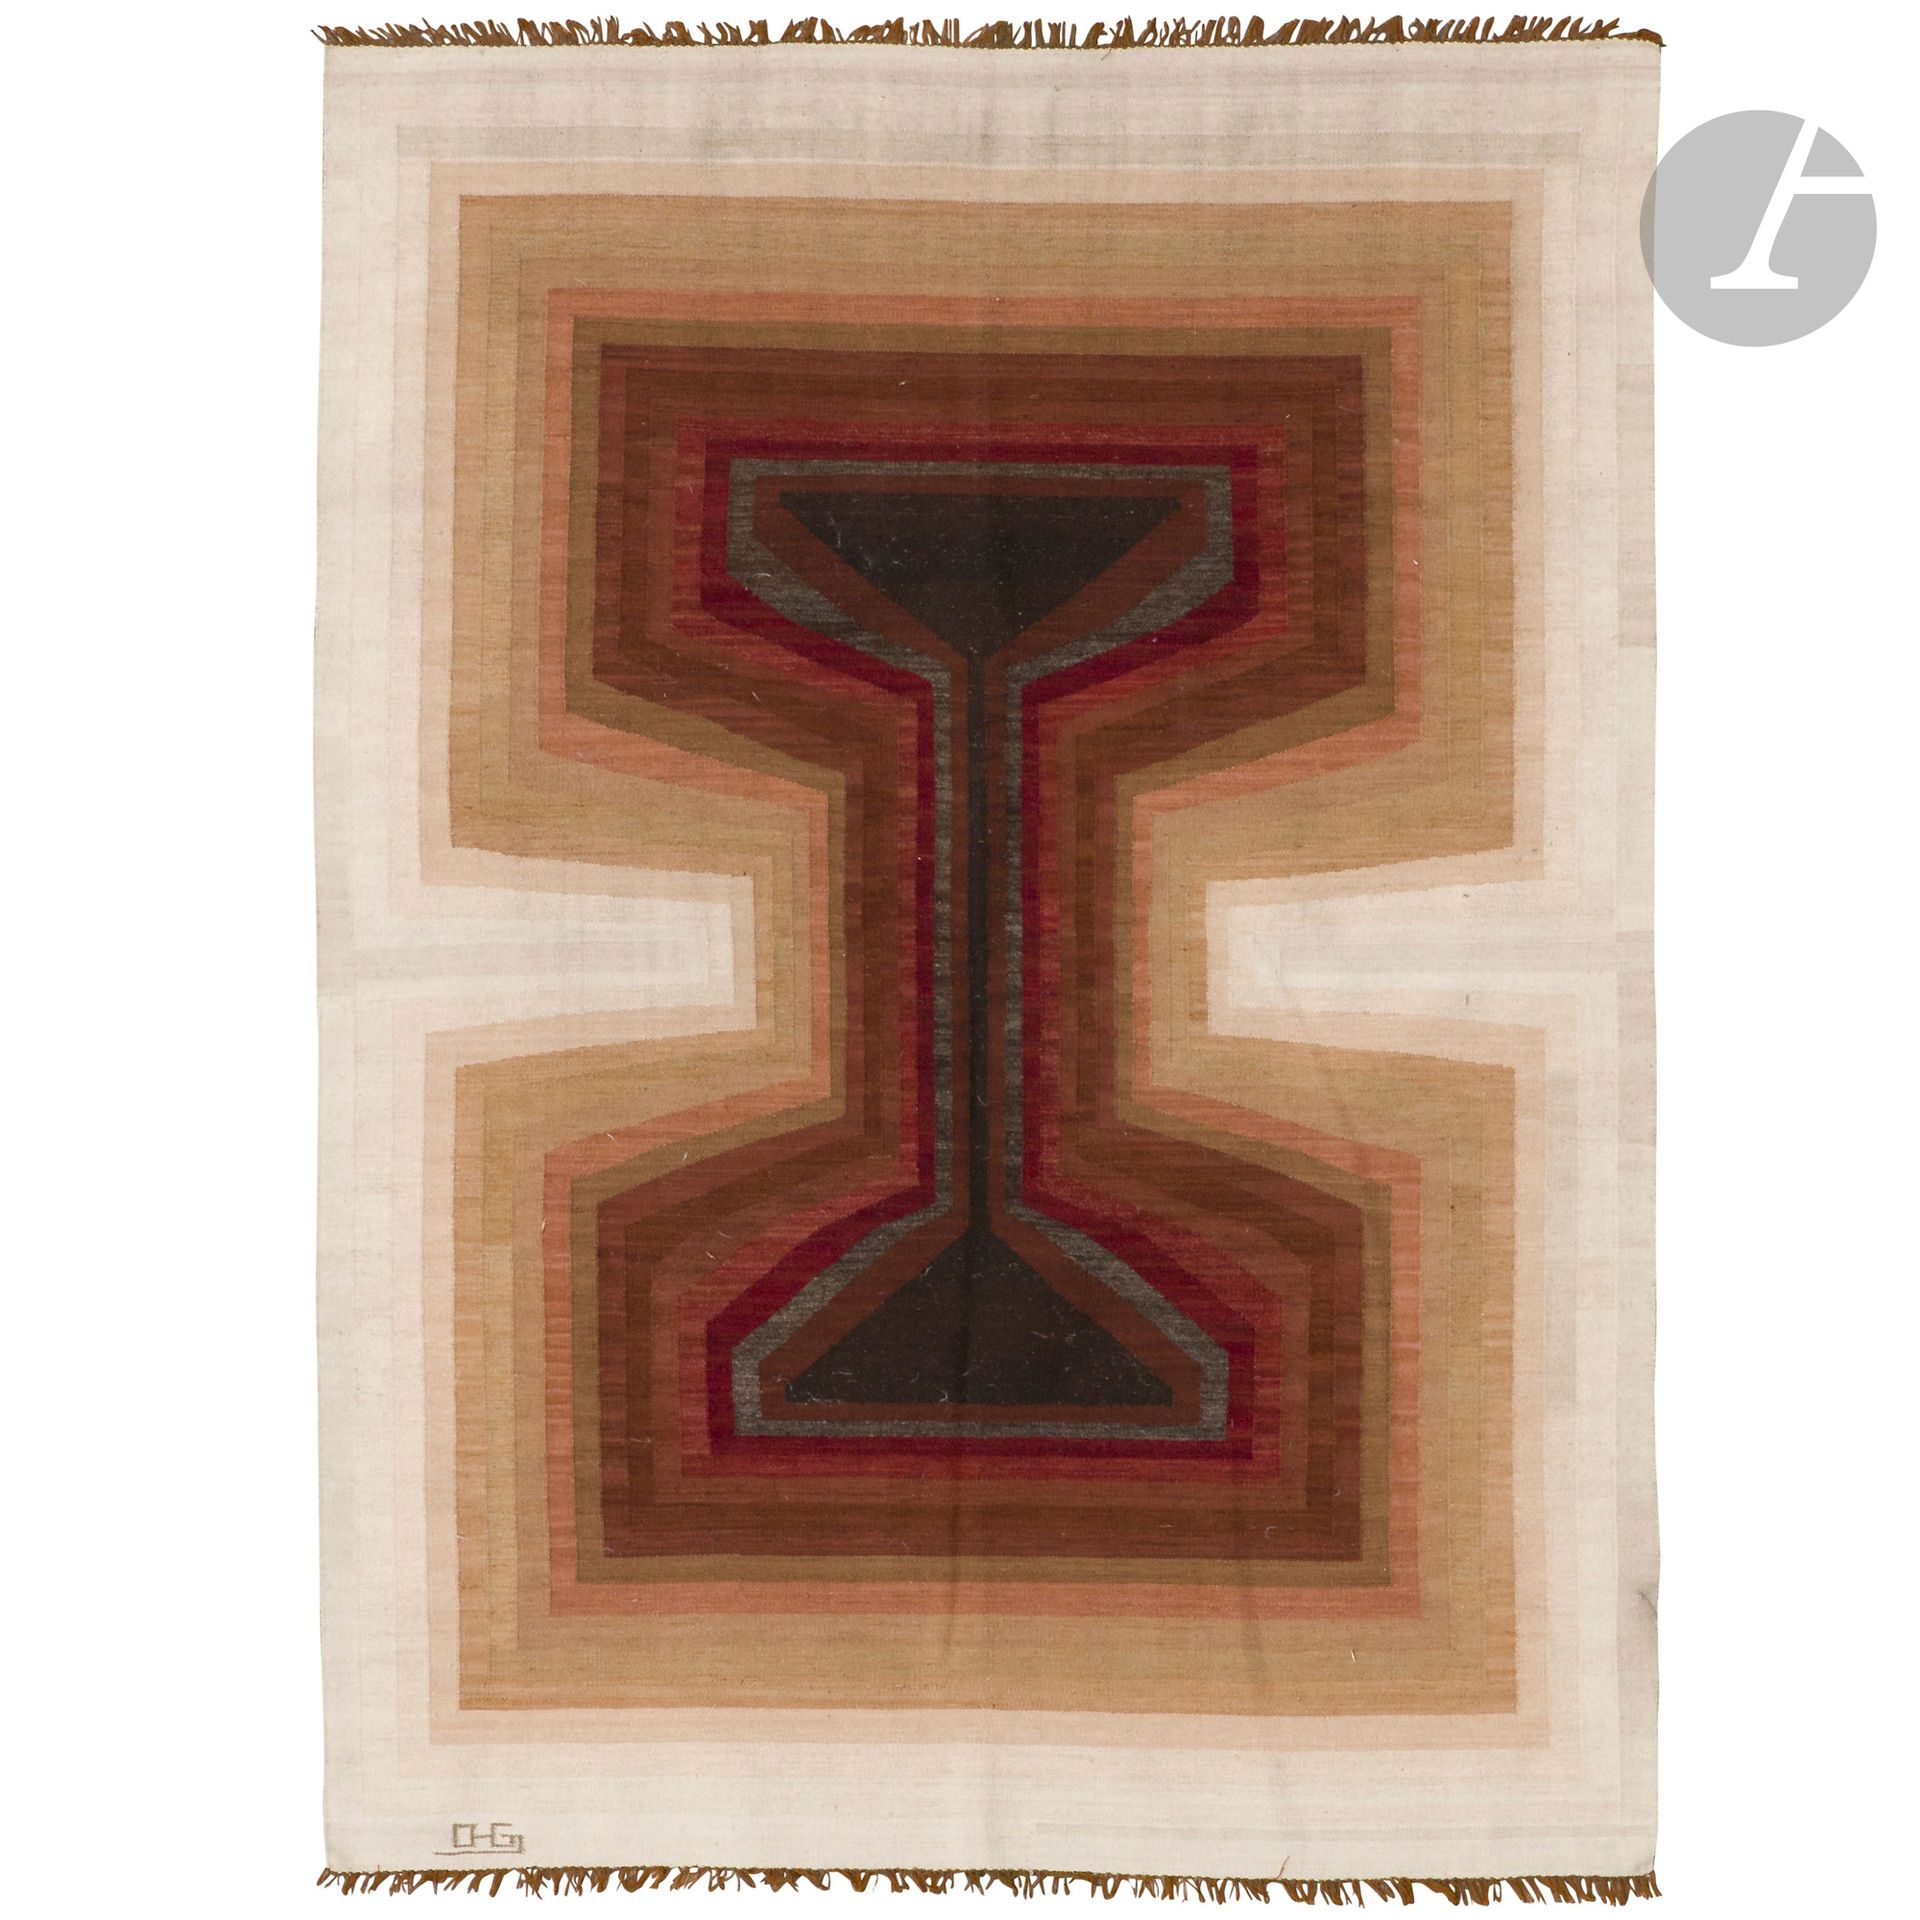 Null 20 世纪秘鲁挂毯《无题
挂毯。彩色羊毛。纬线左下方有 O.G. 字样，背面有 Galeria Latina 的印章。